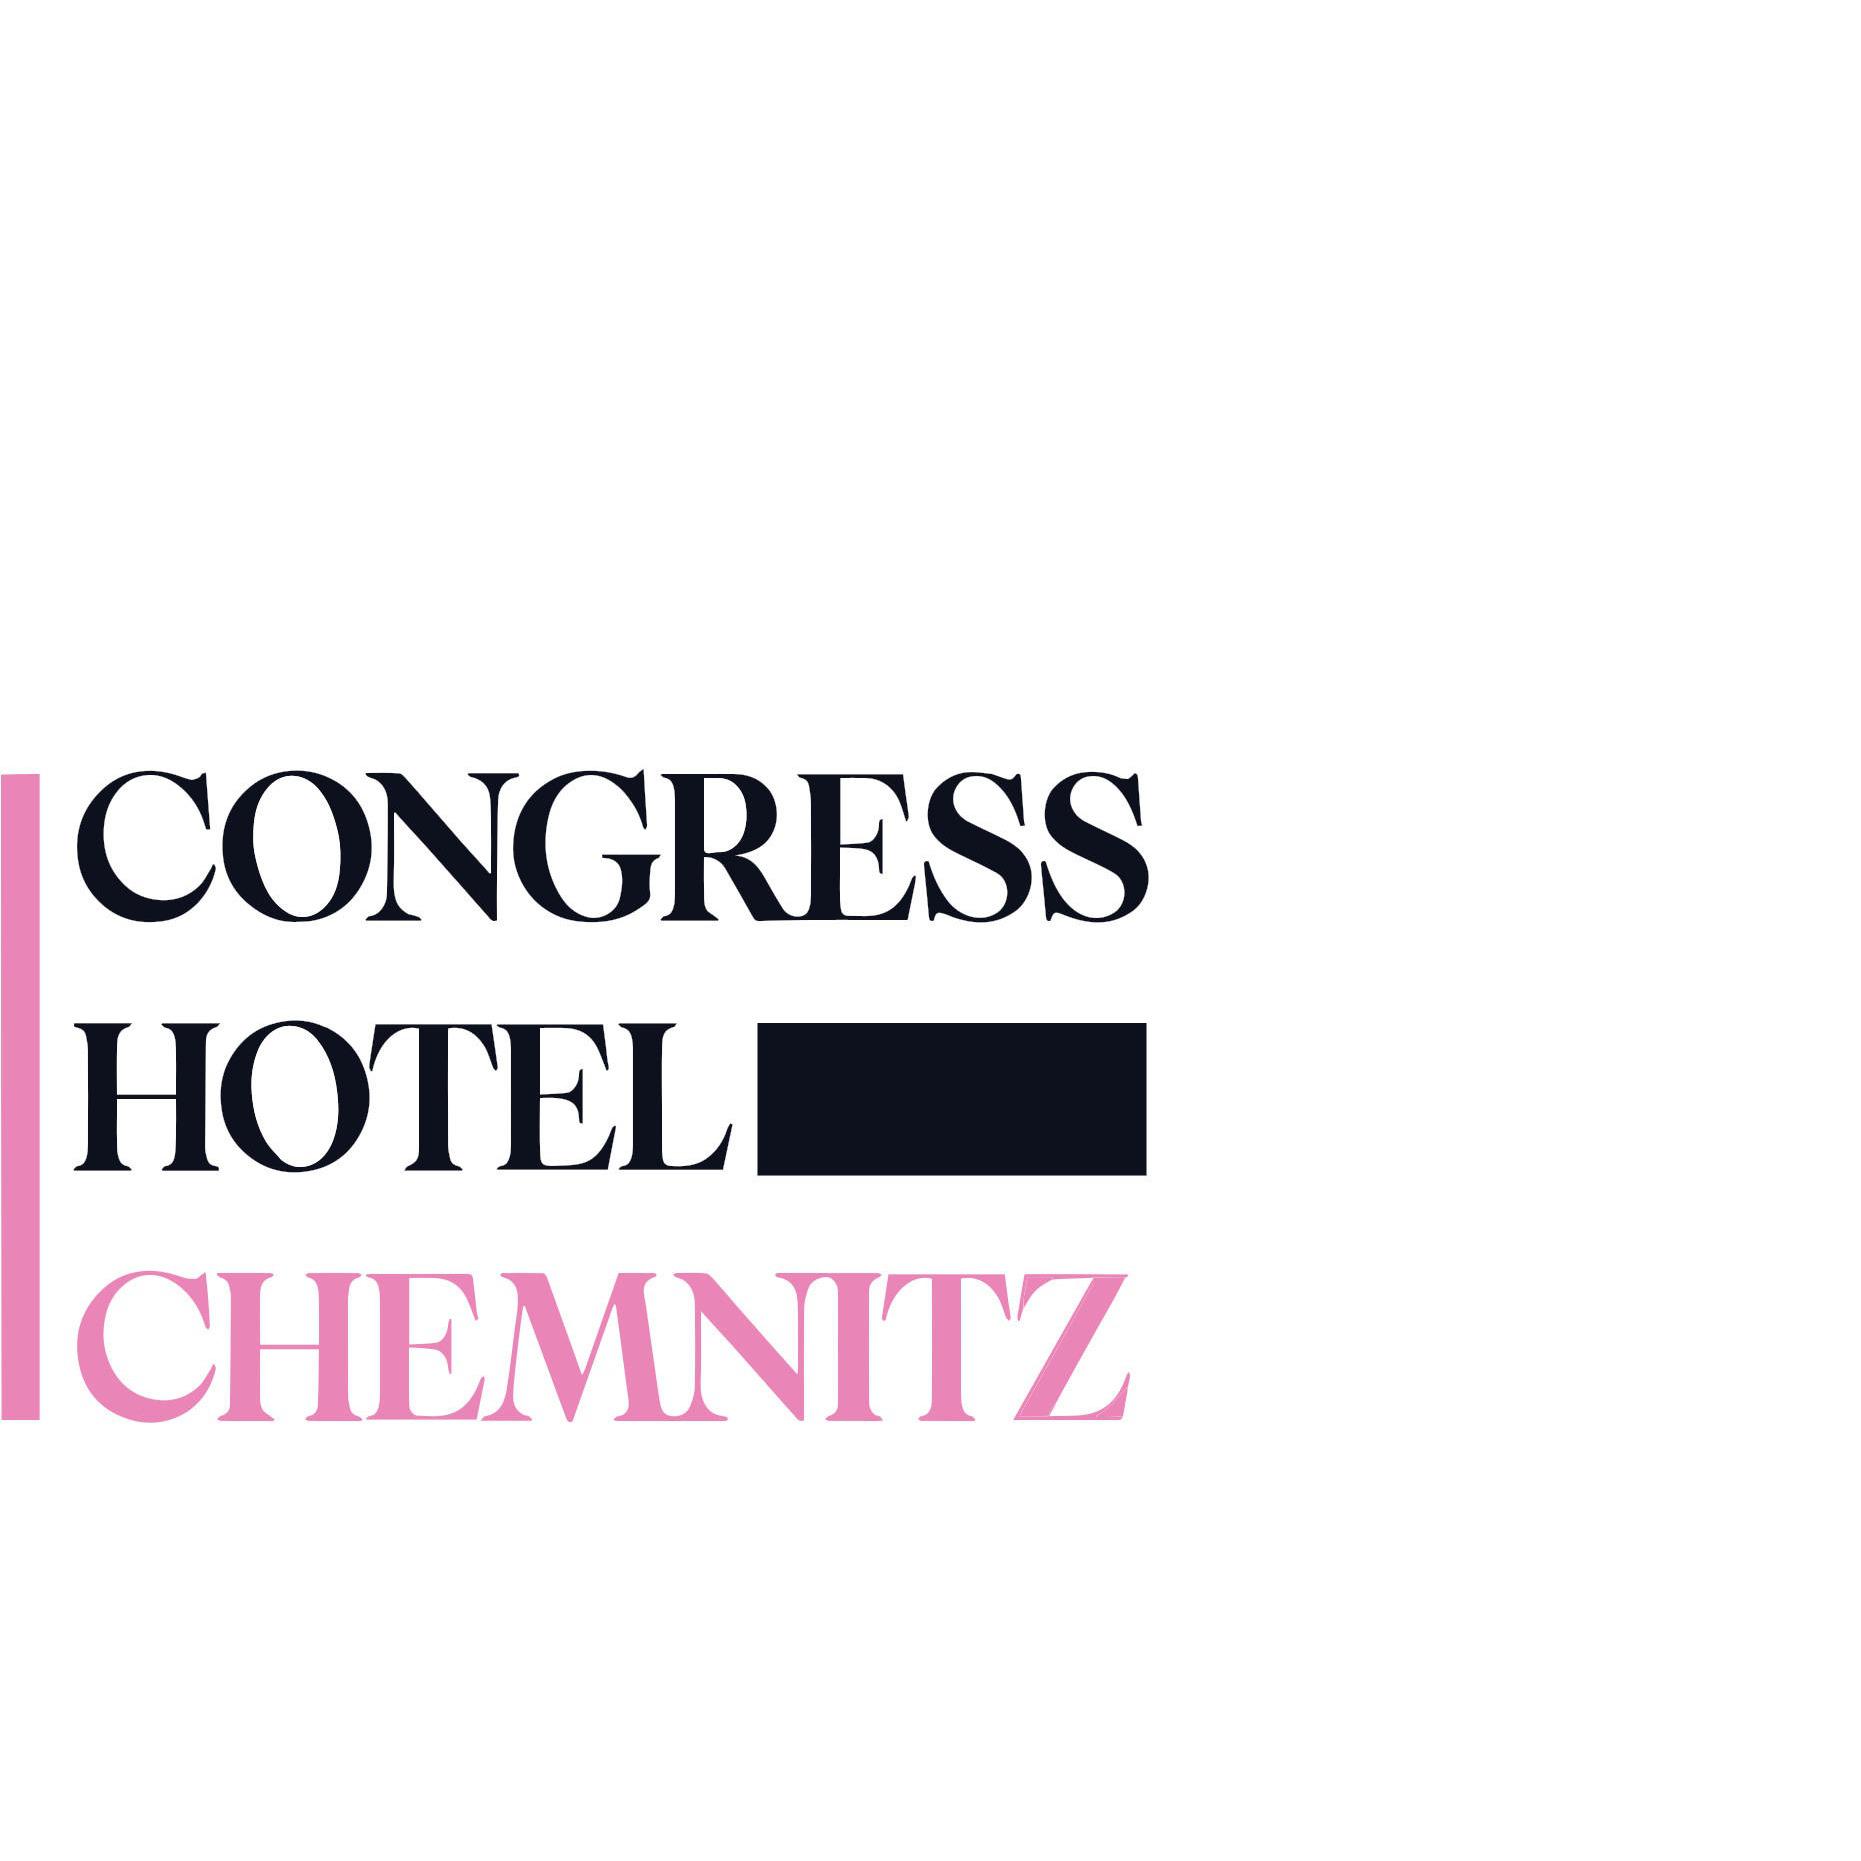 Congress Hotel Chemnitz in Chemnitz - Logo